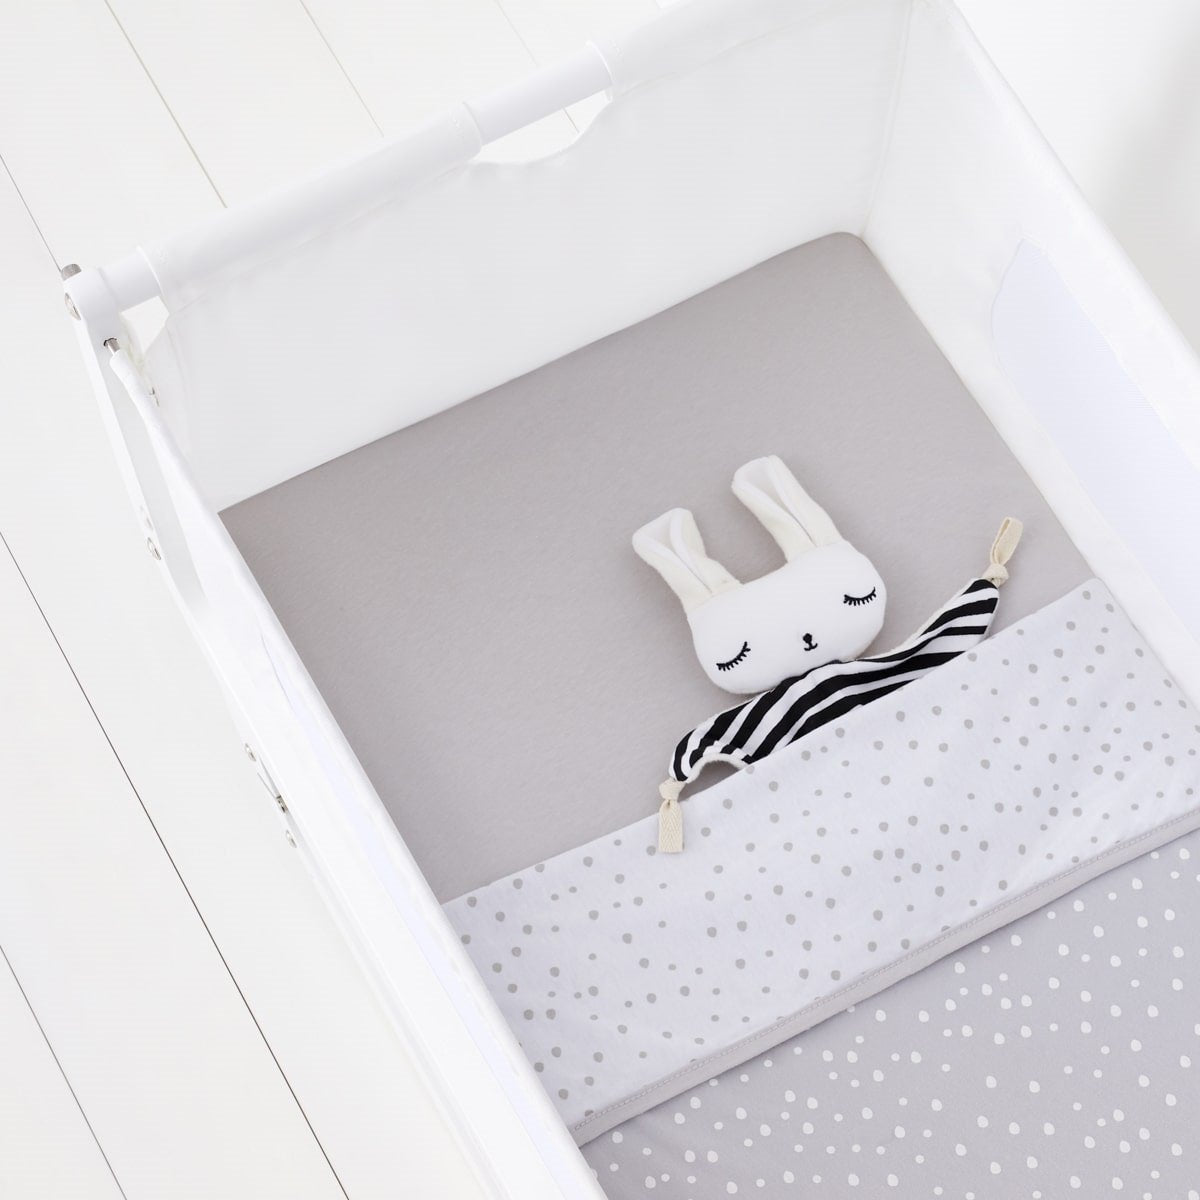 Snuzpod 3pc Crib Bedding Set - Grey Spots